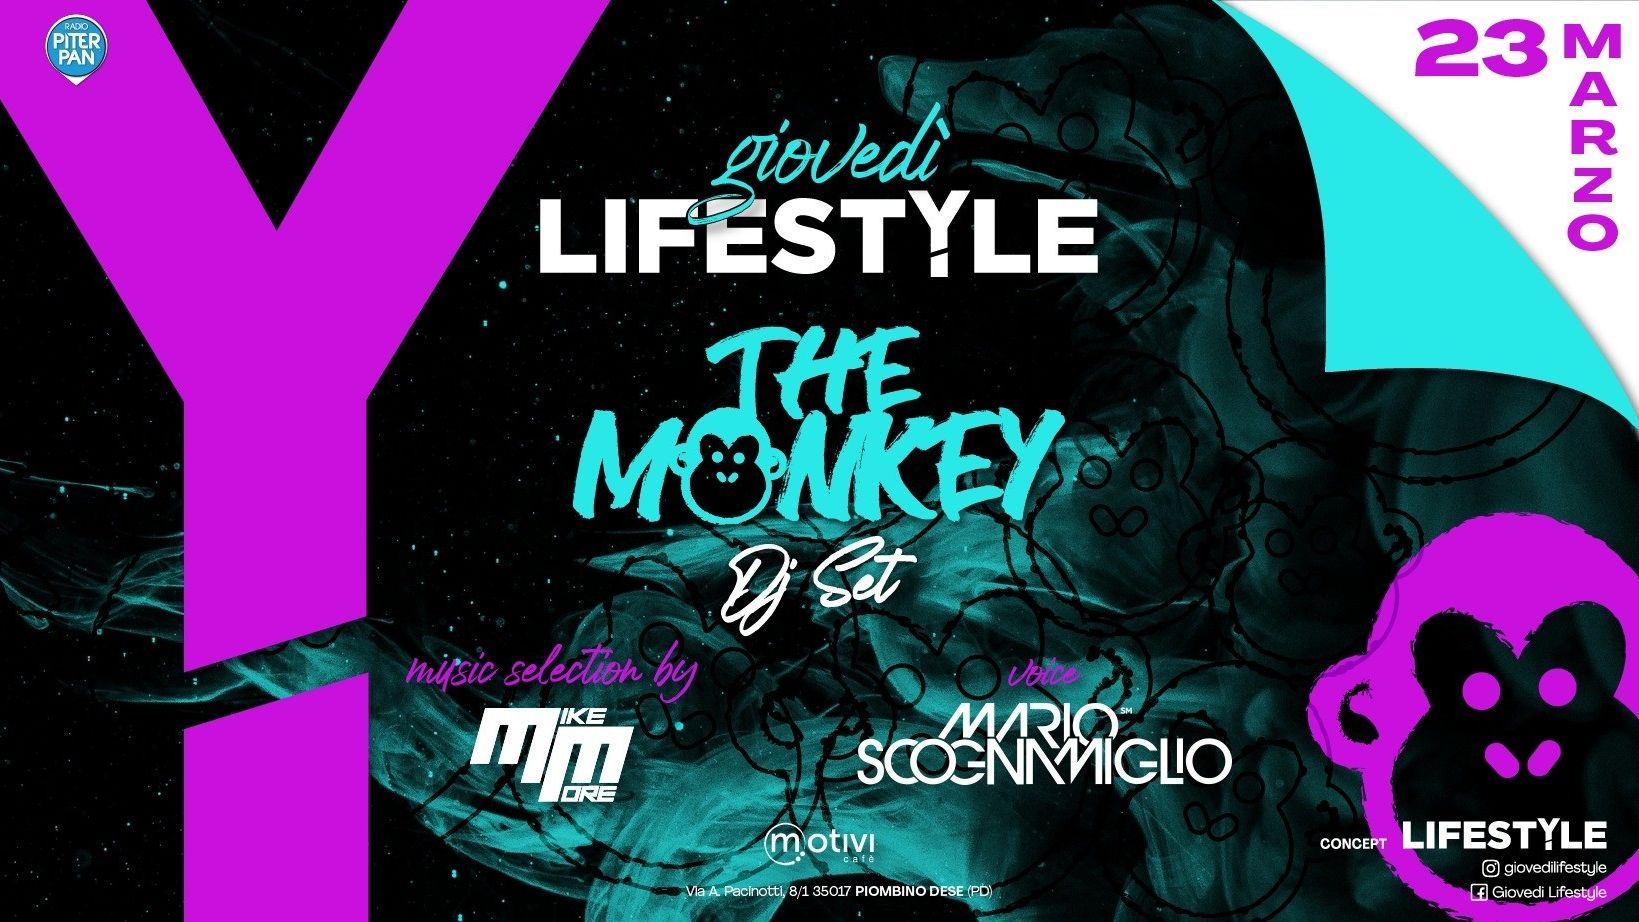 The Monkey dj set - Mike More dj